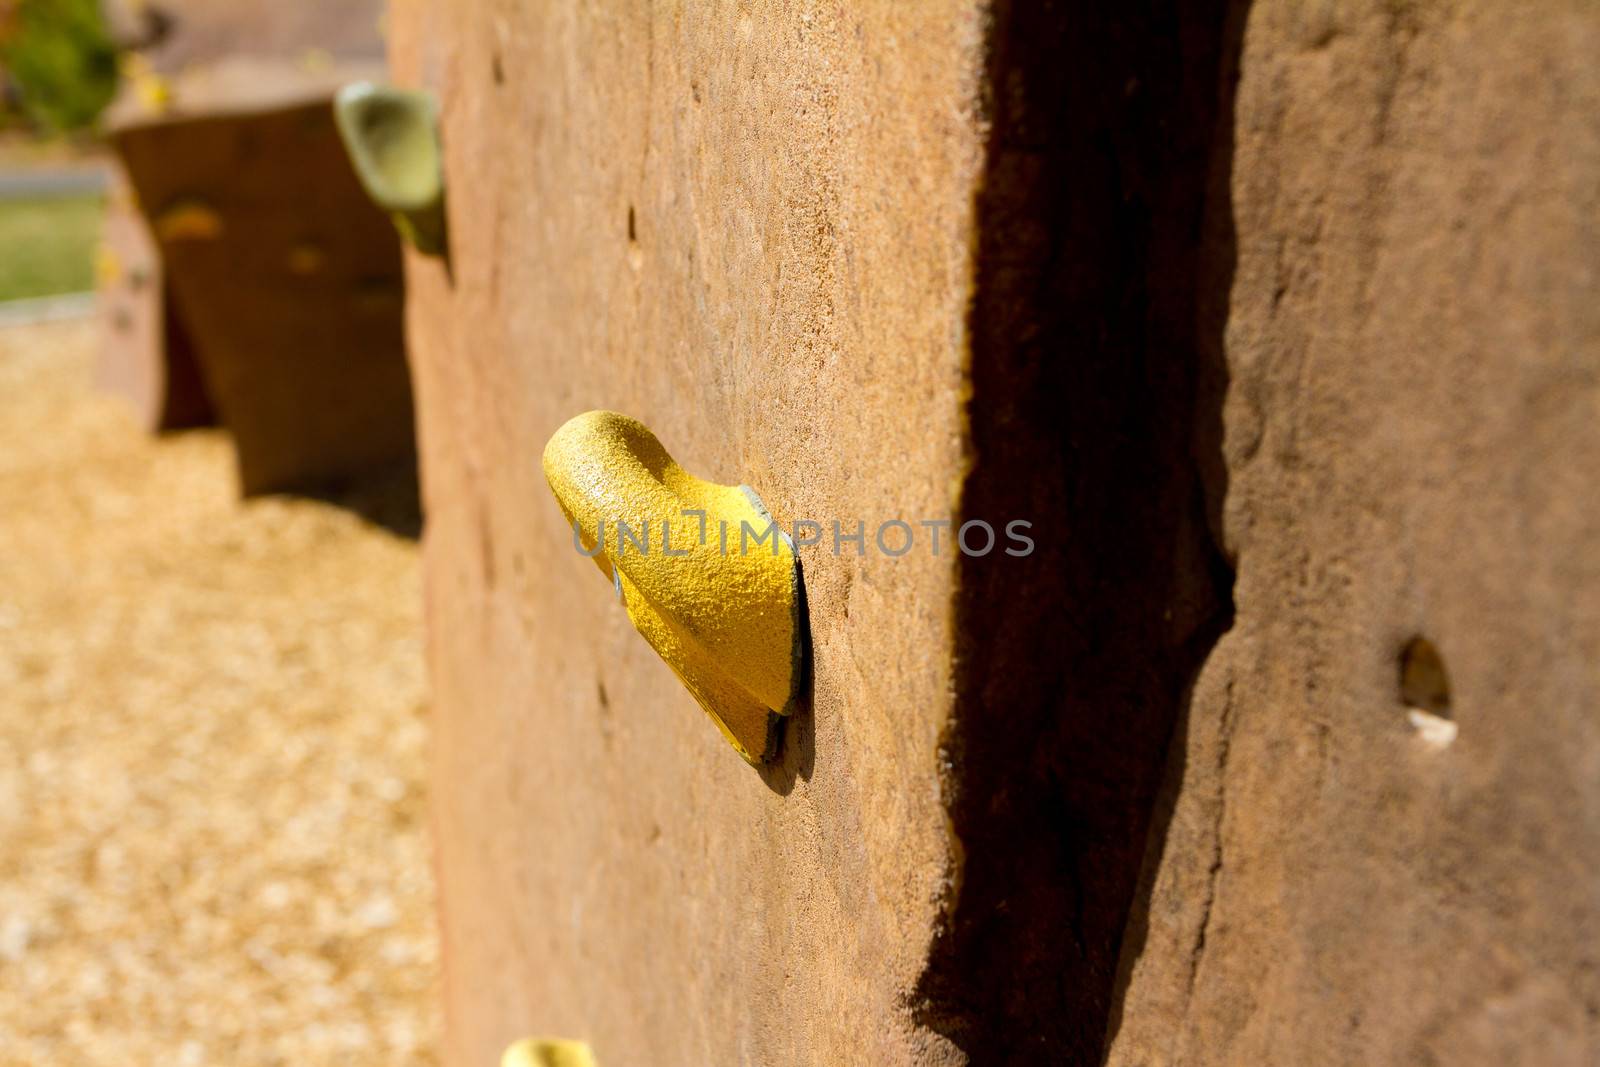 Rock Climbing Handhold Detail by joshuaraineyphotography